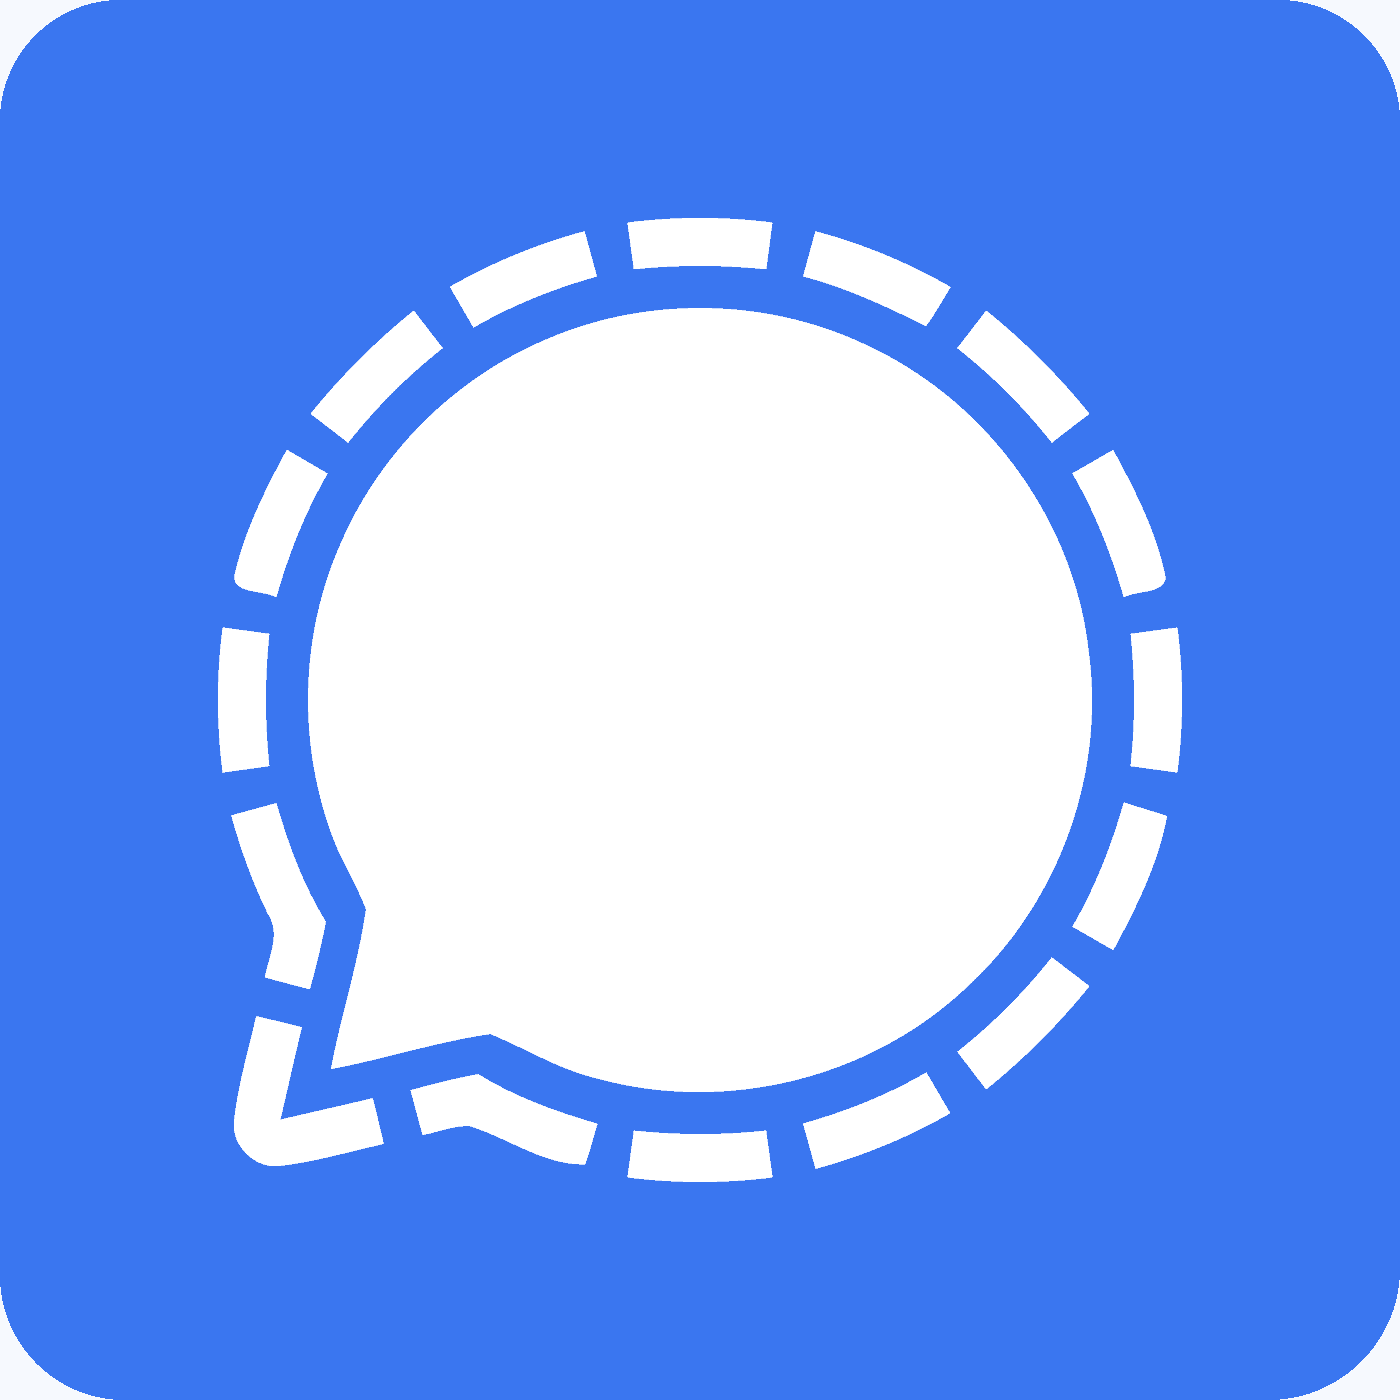 Signal Logo Icon png